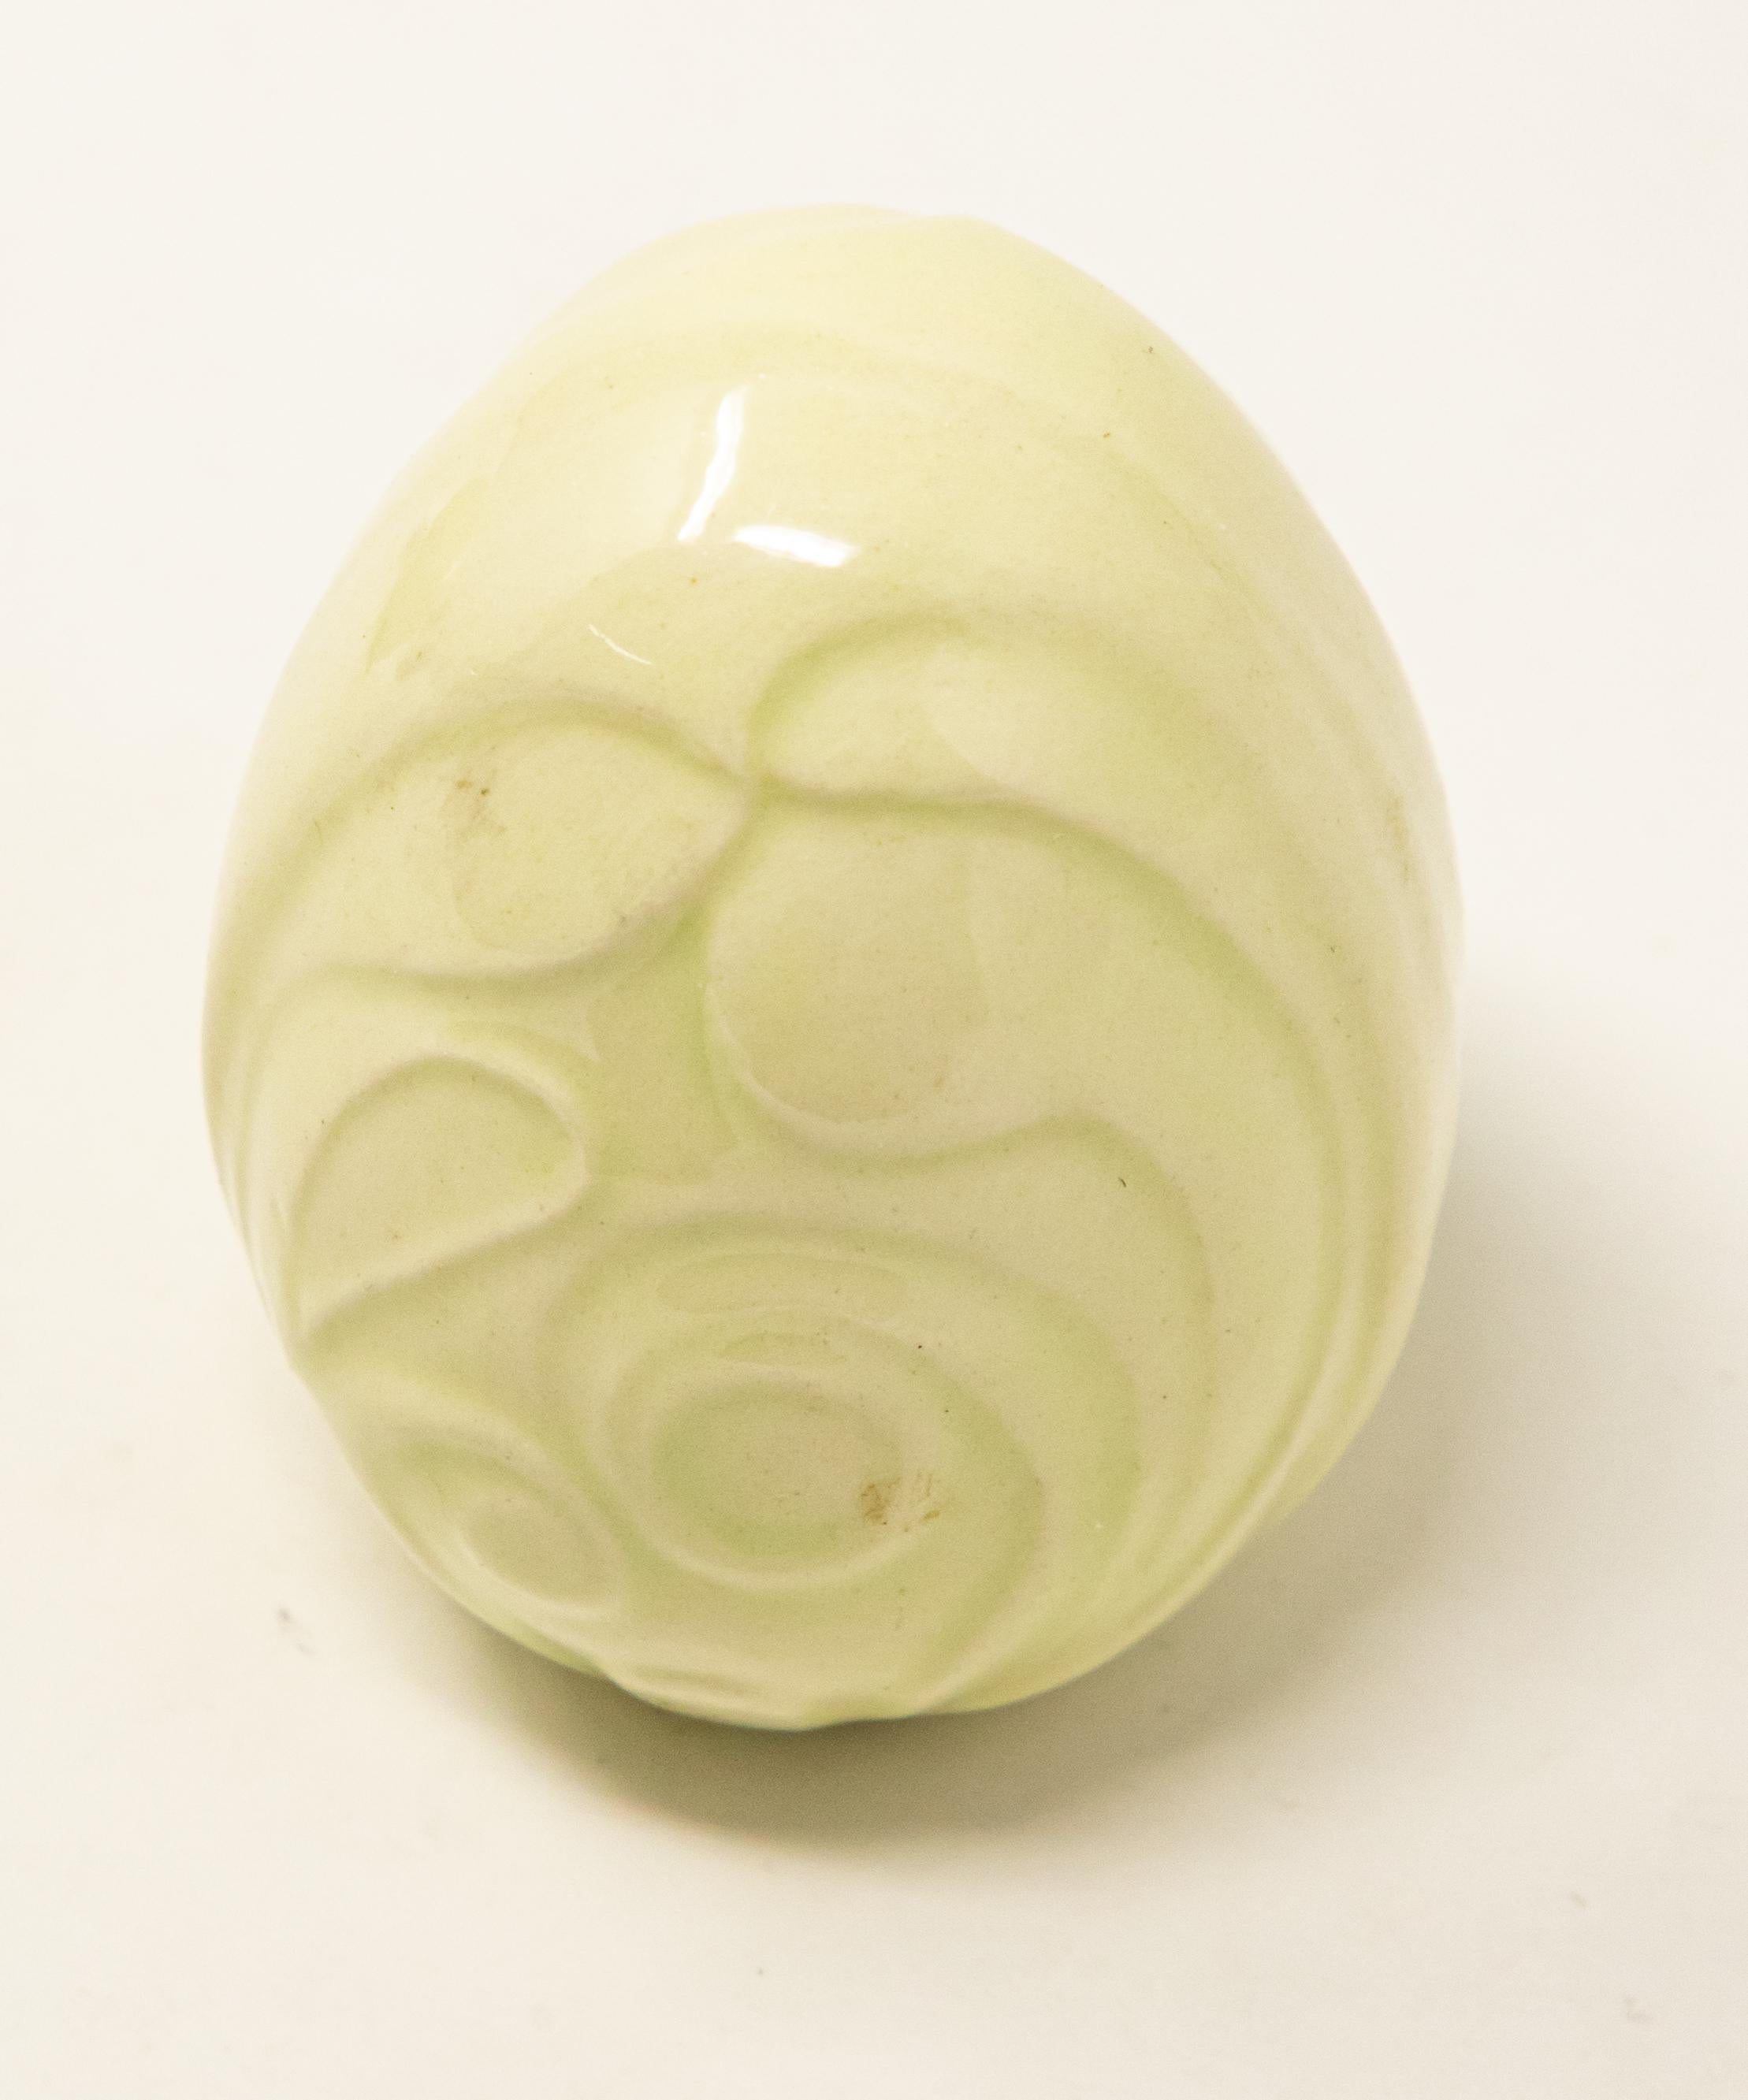 American Glazed Ceramic Eggs For Sale